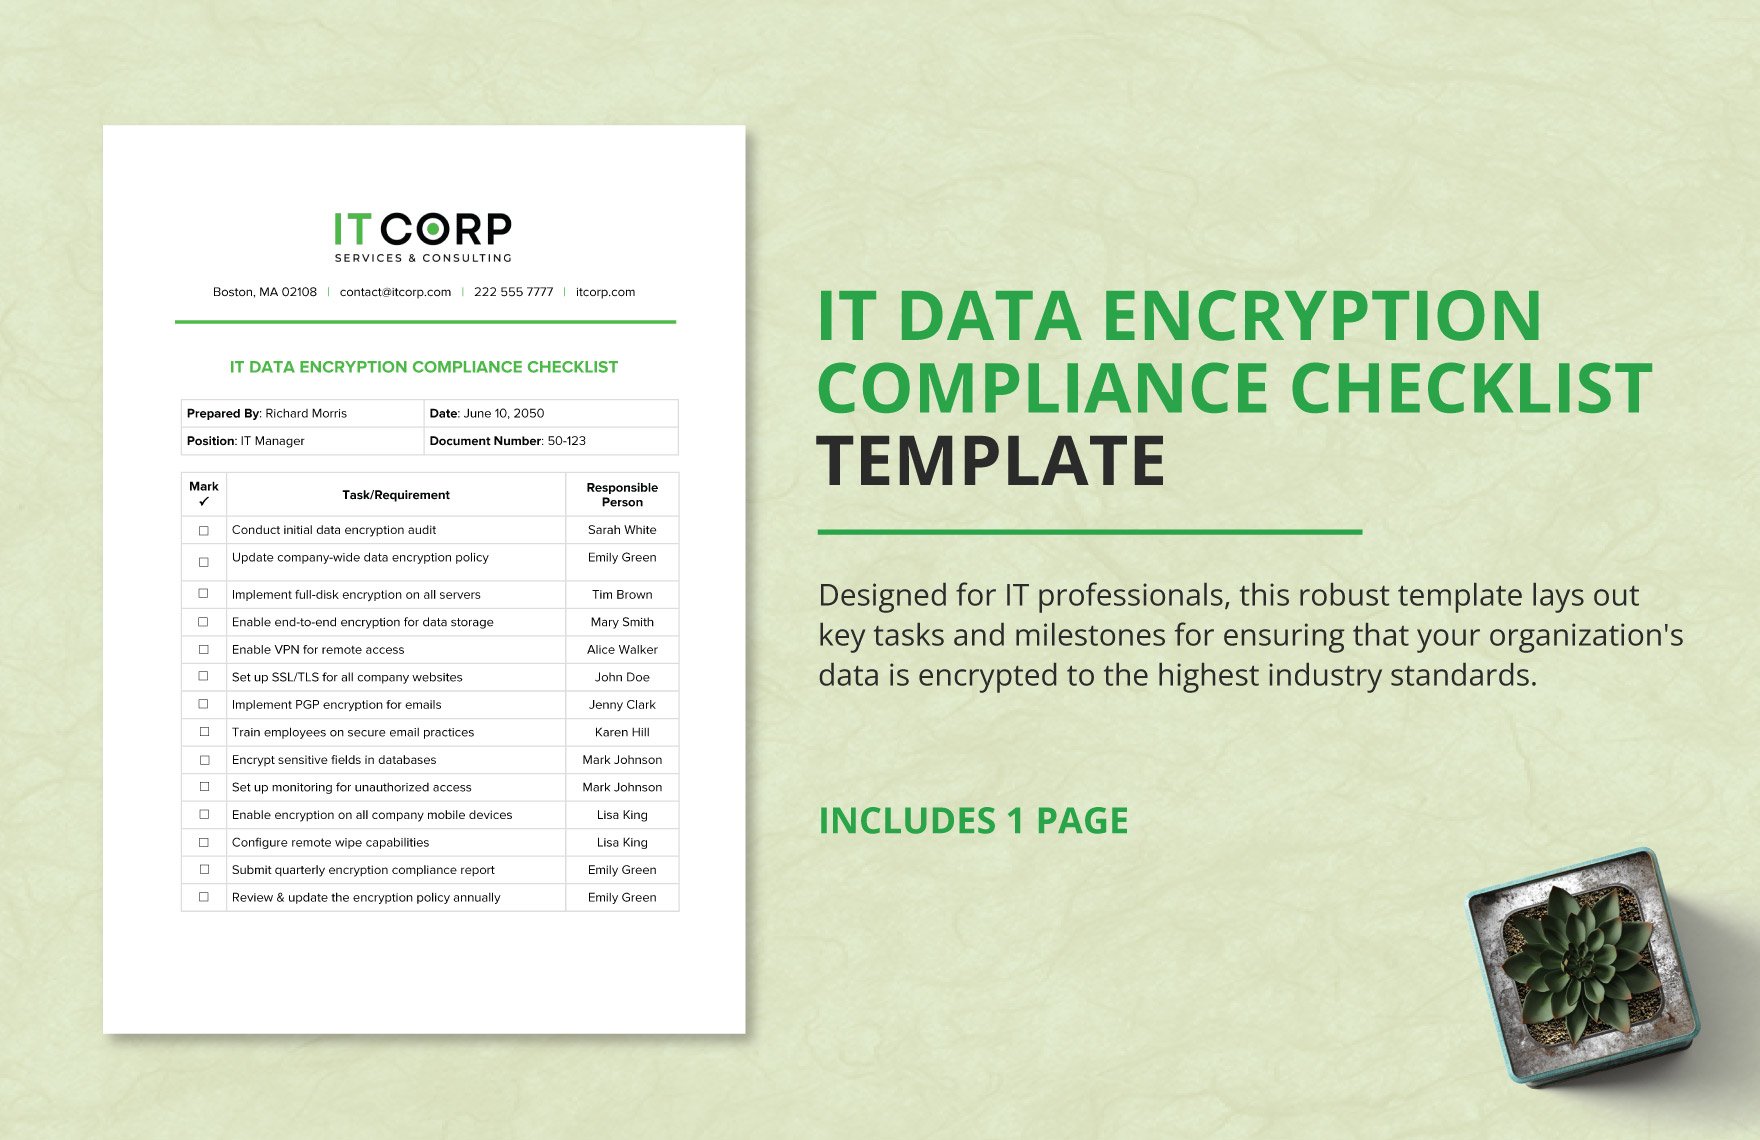 IT Data Encryption Compliance Checklist Template